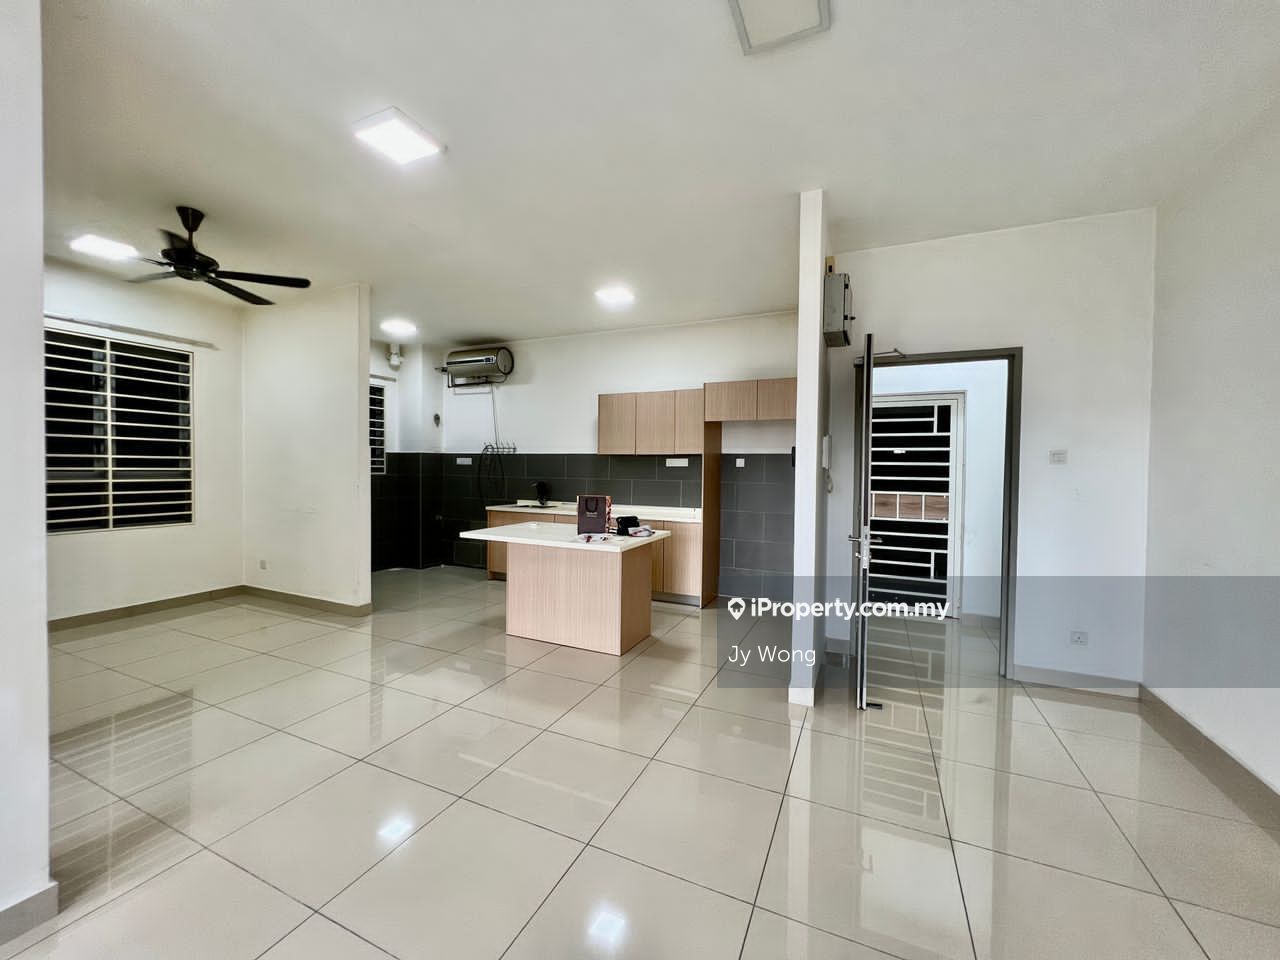 Low floor, kitchen cabinet, 4 unit air cond